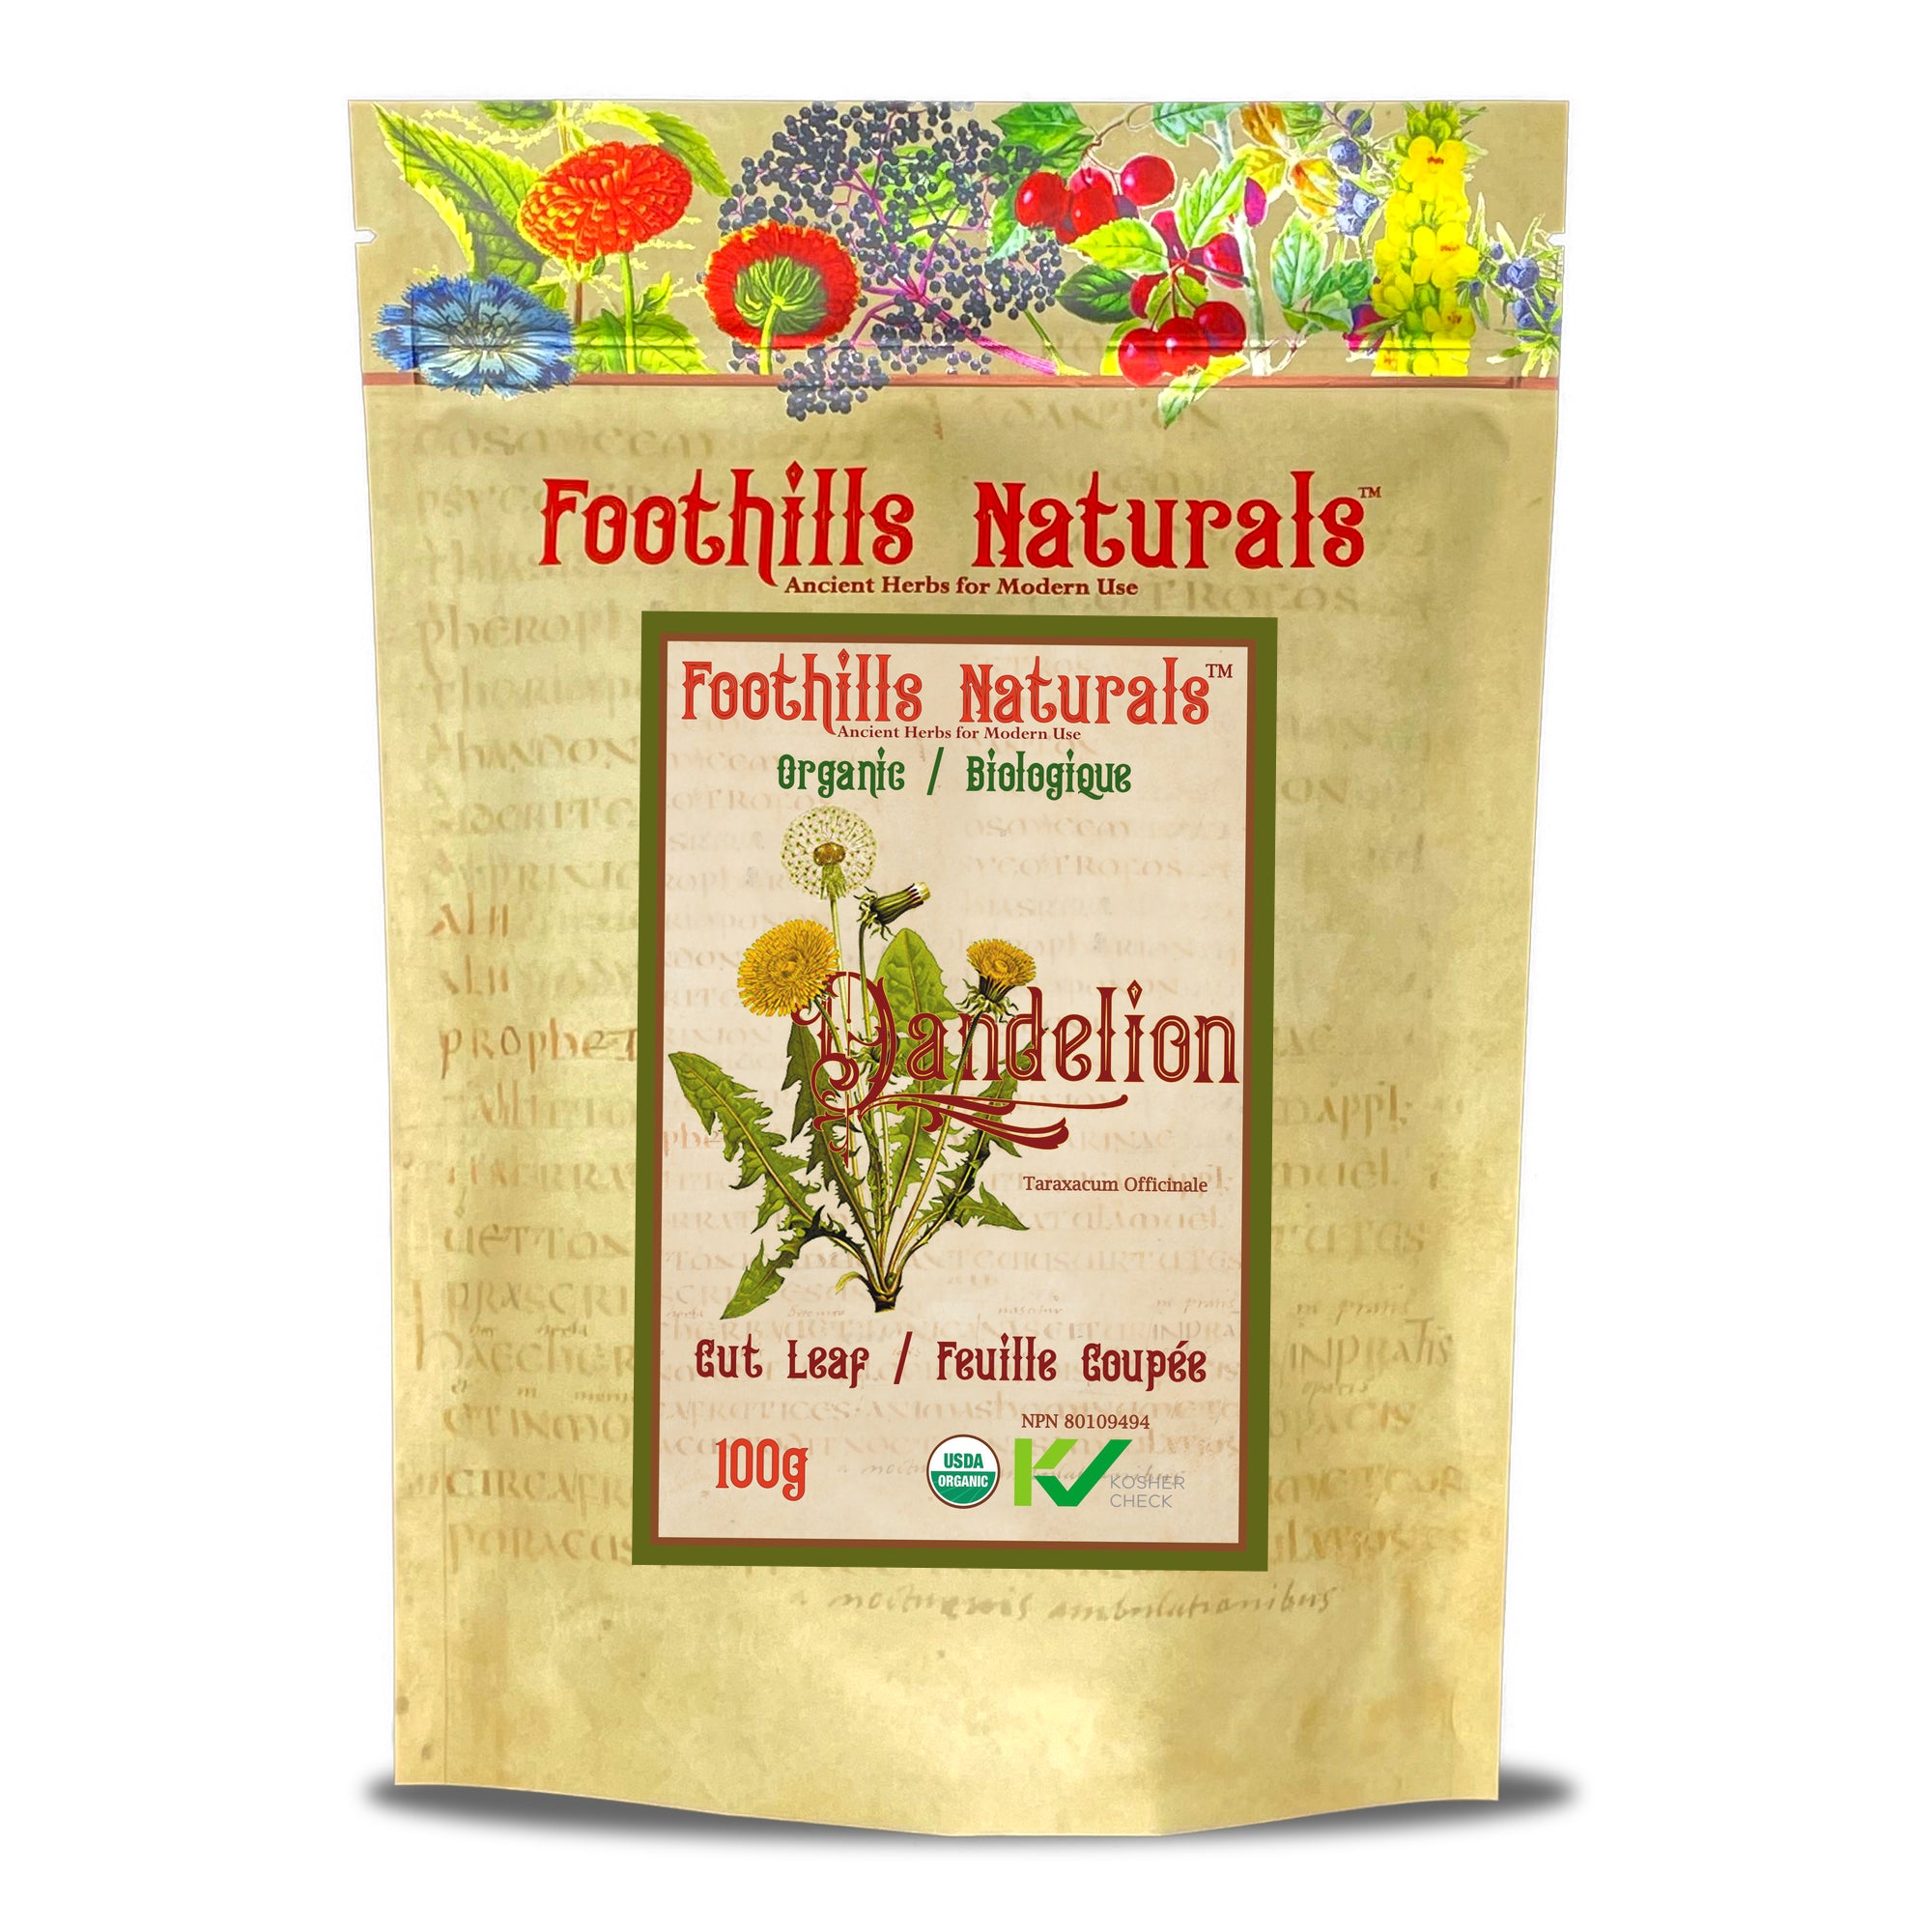 Dandelion Leaf Tea Organic - Bile Flow, Digestive Upset